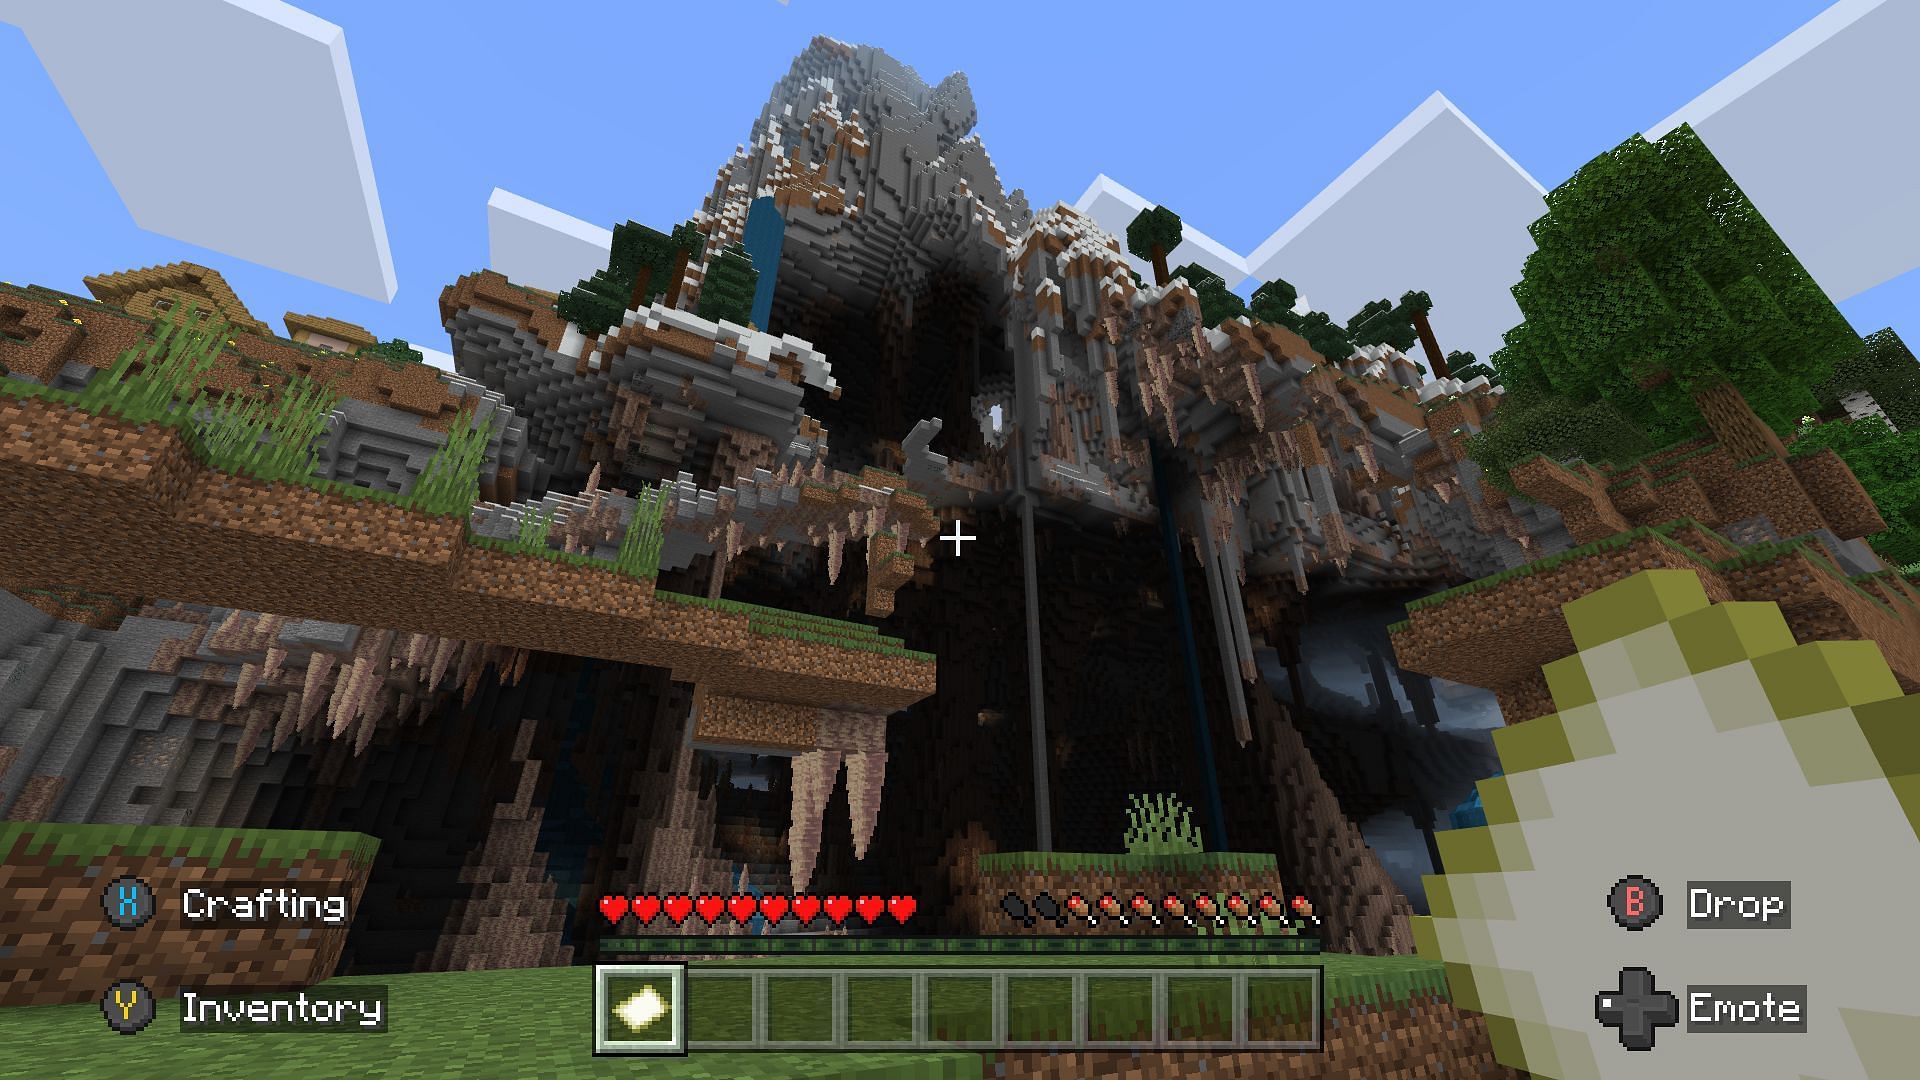 Mountain with dripstone caves (Image via u/LiterallySoManyBears on Reddit)